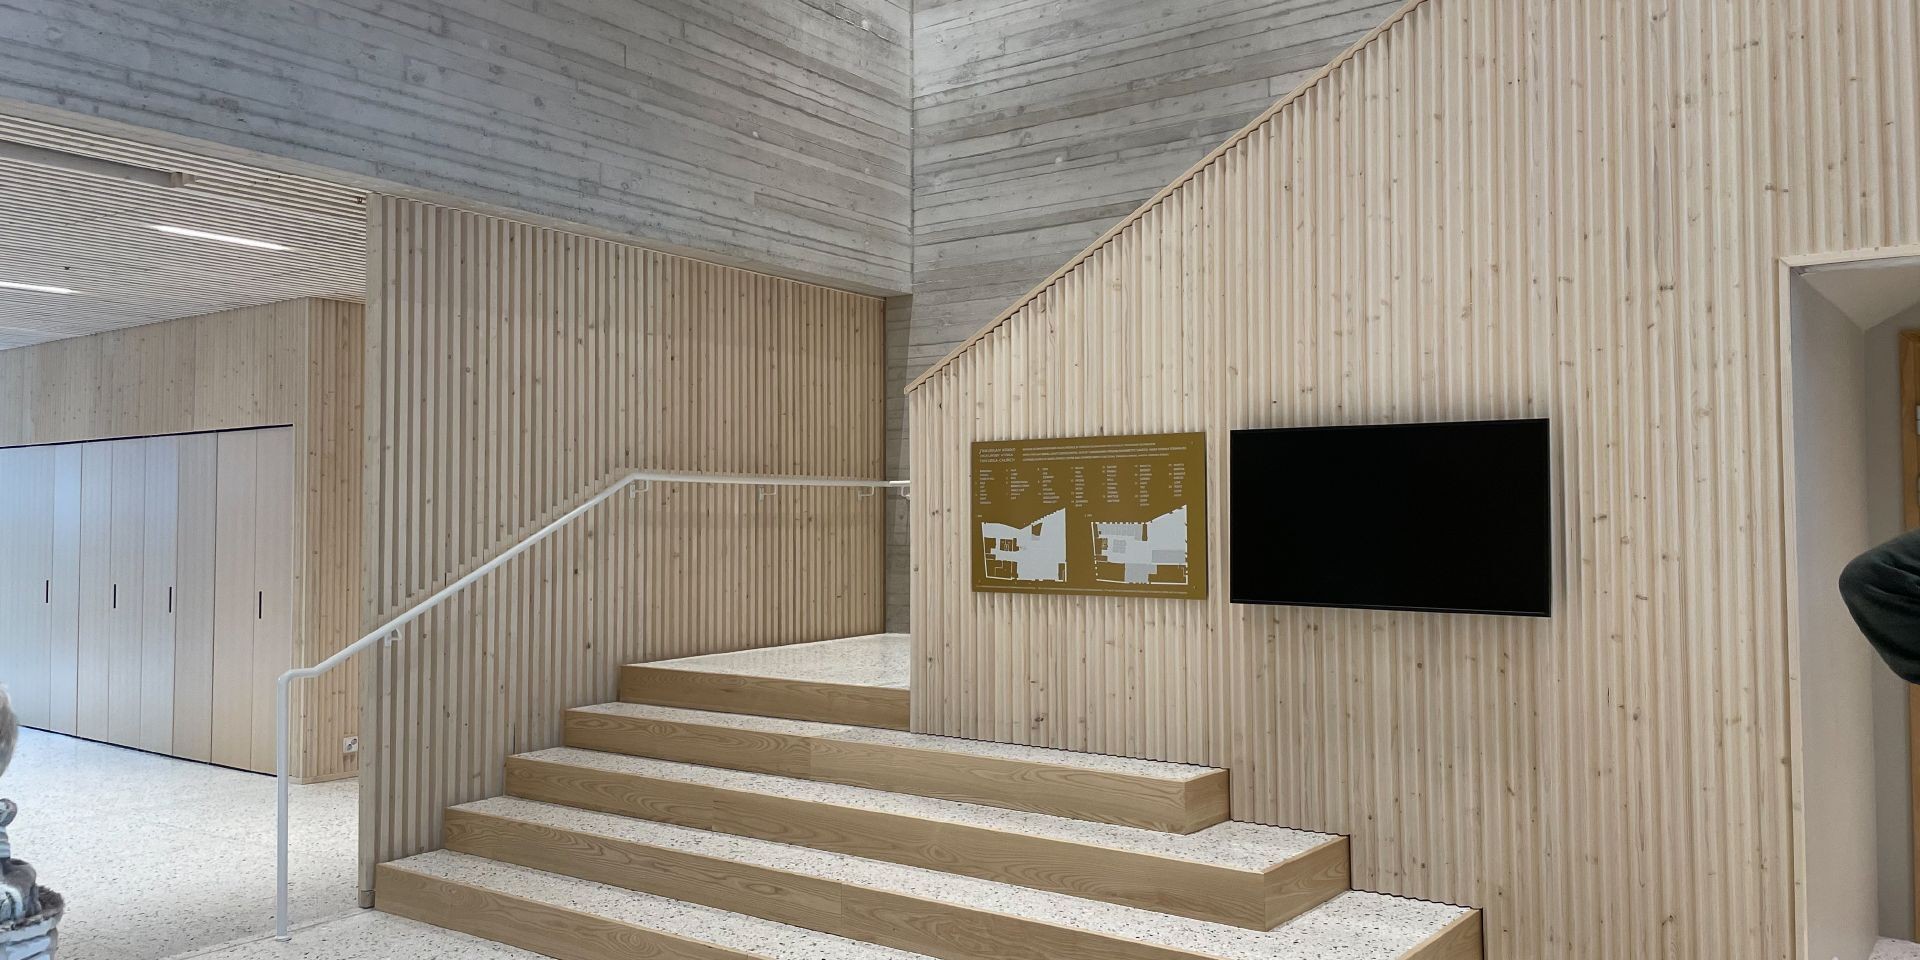 Interior wooden boards